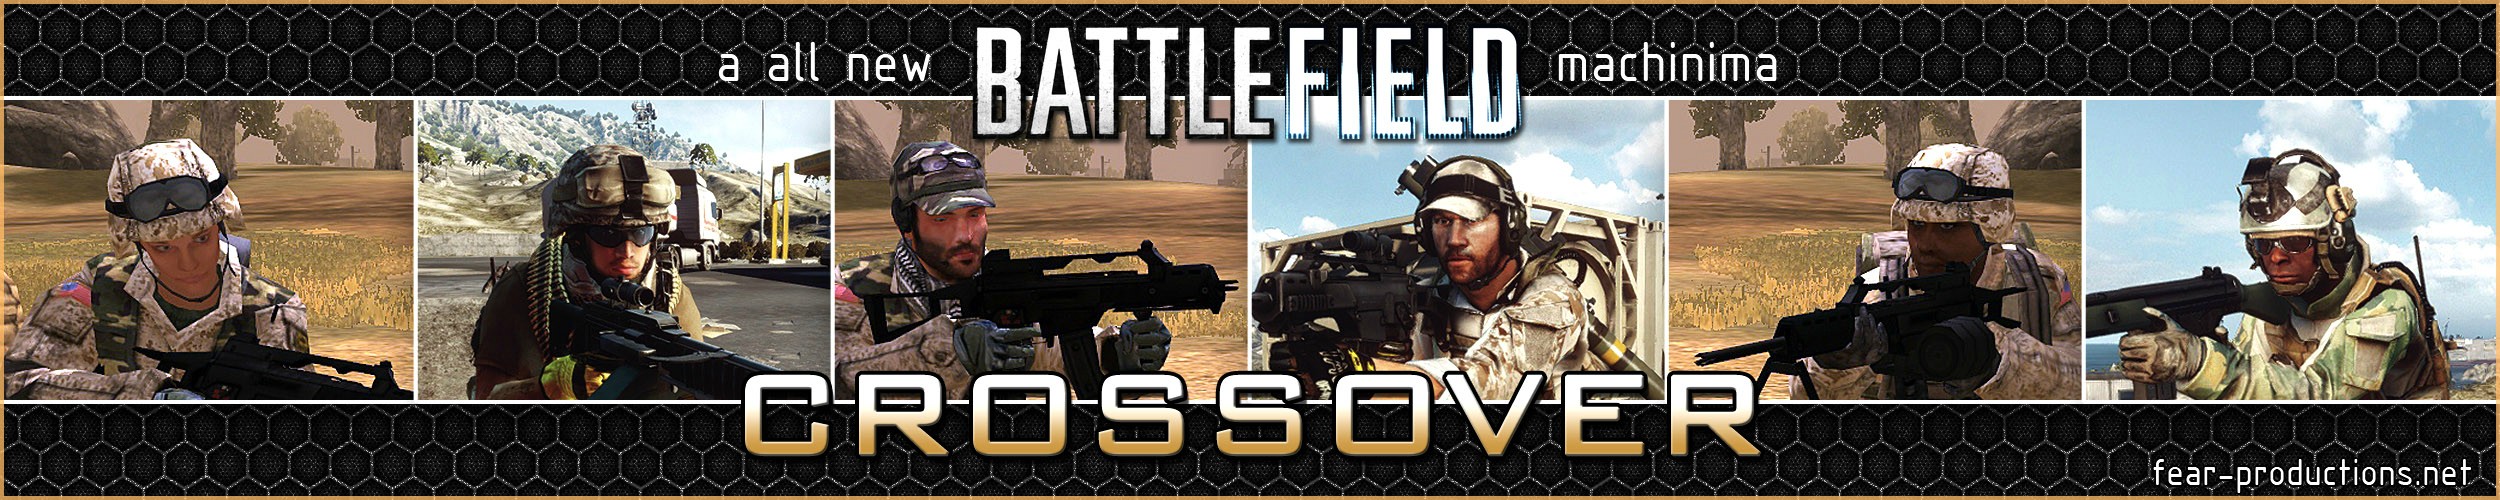 Battlefield Crossover Banner